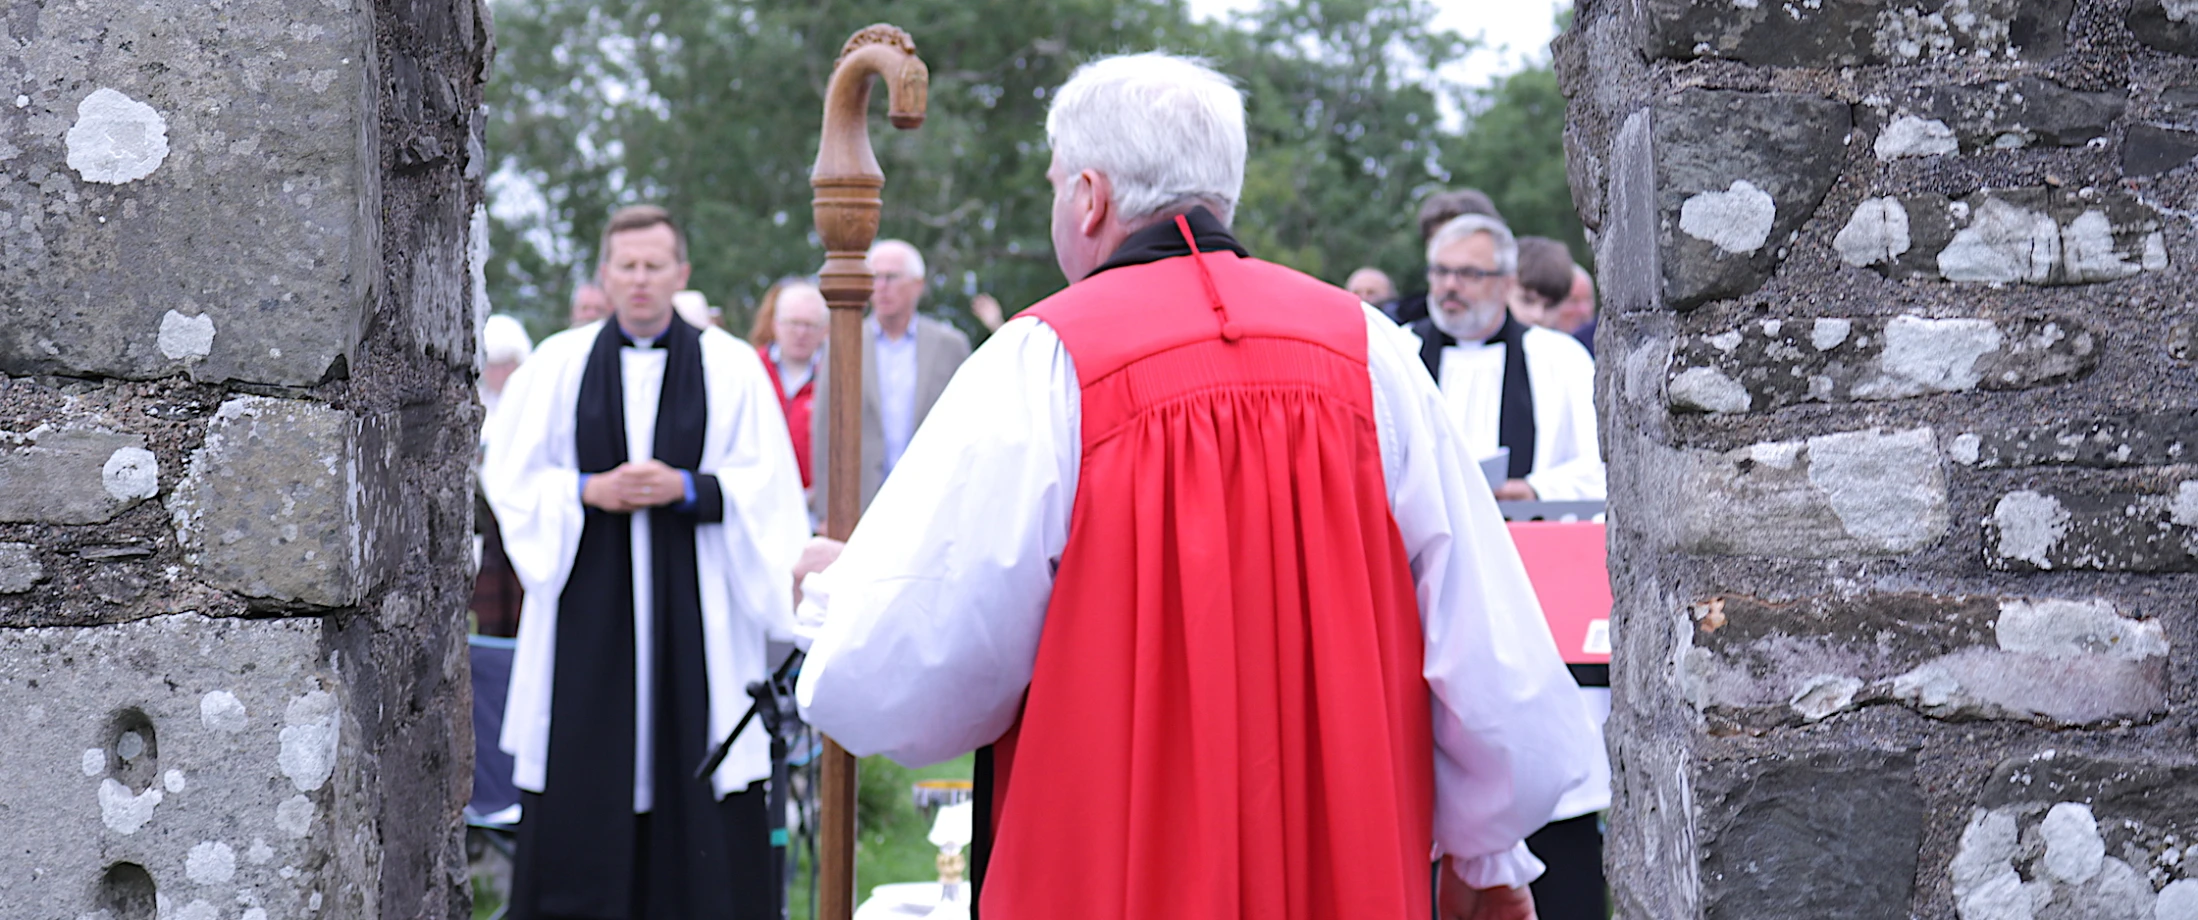 Historic ordinations at Nendrum Monastic Site